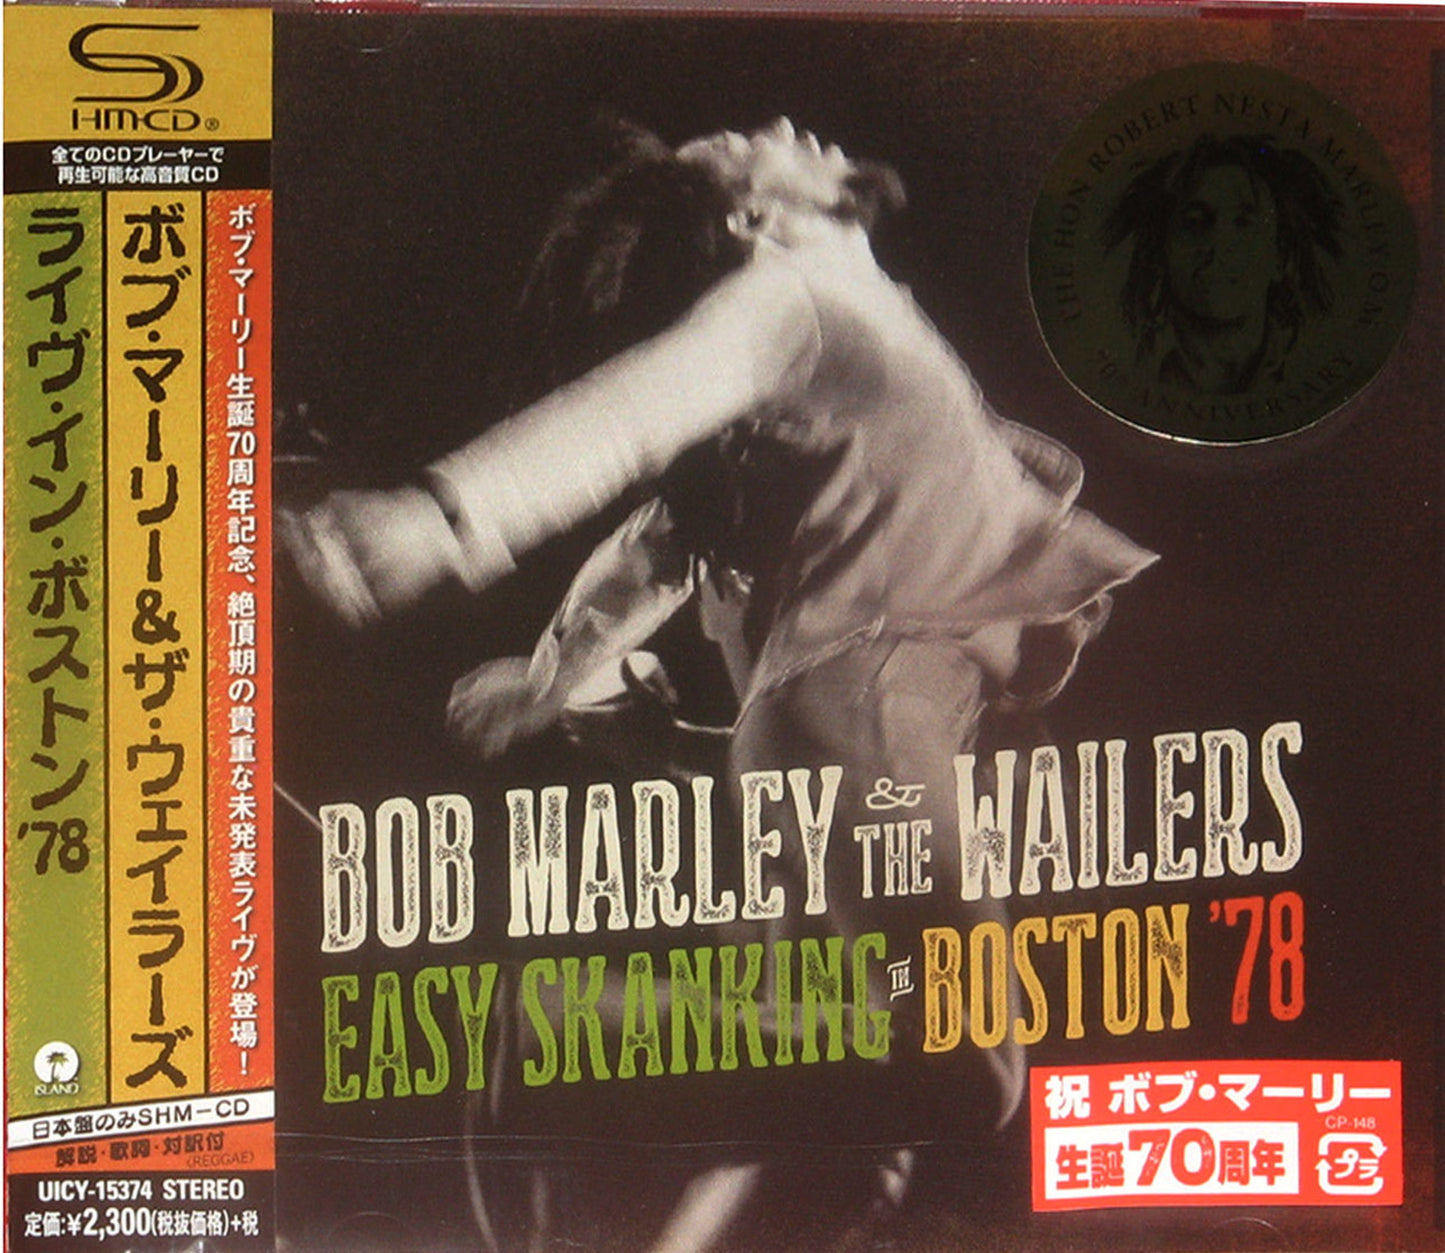 Bob Marley & The Wailers - Easy Skanking In Boston '78 - SHM-CD